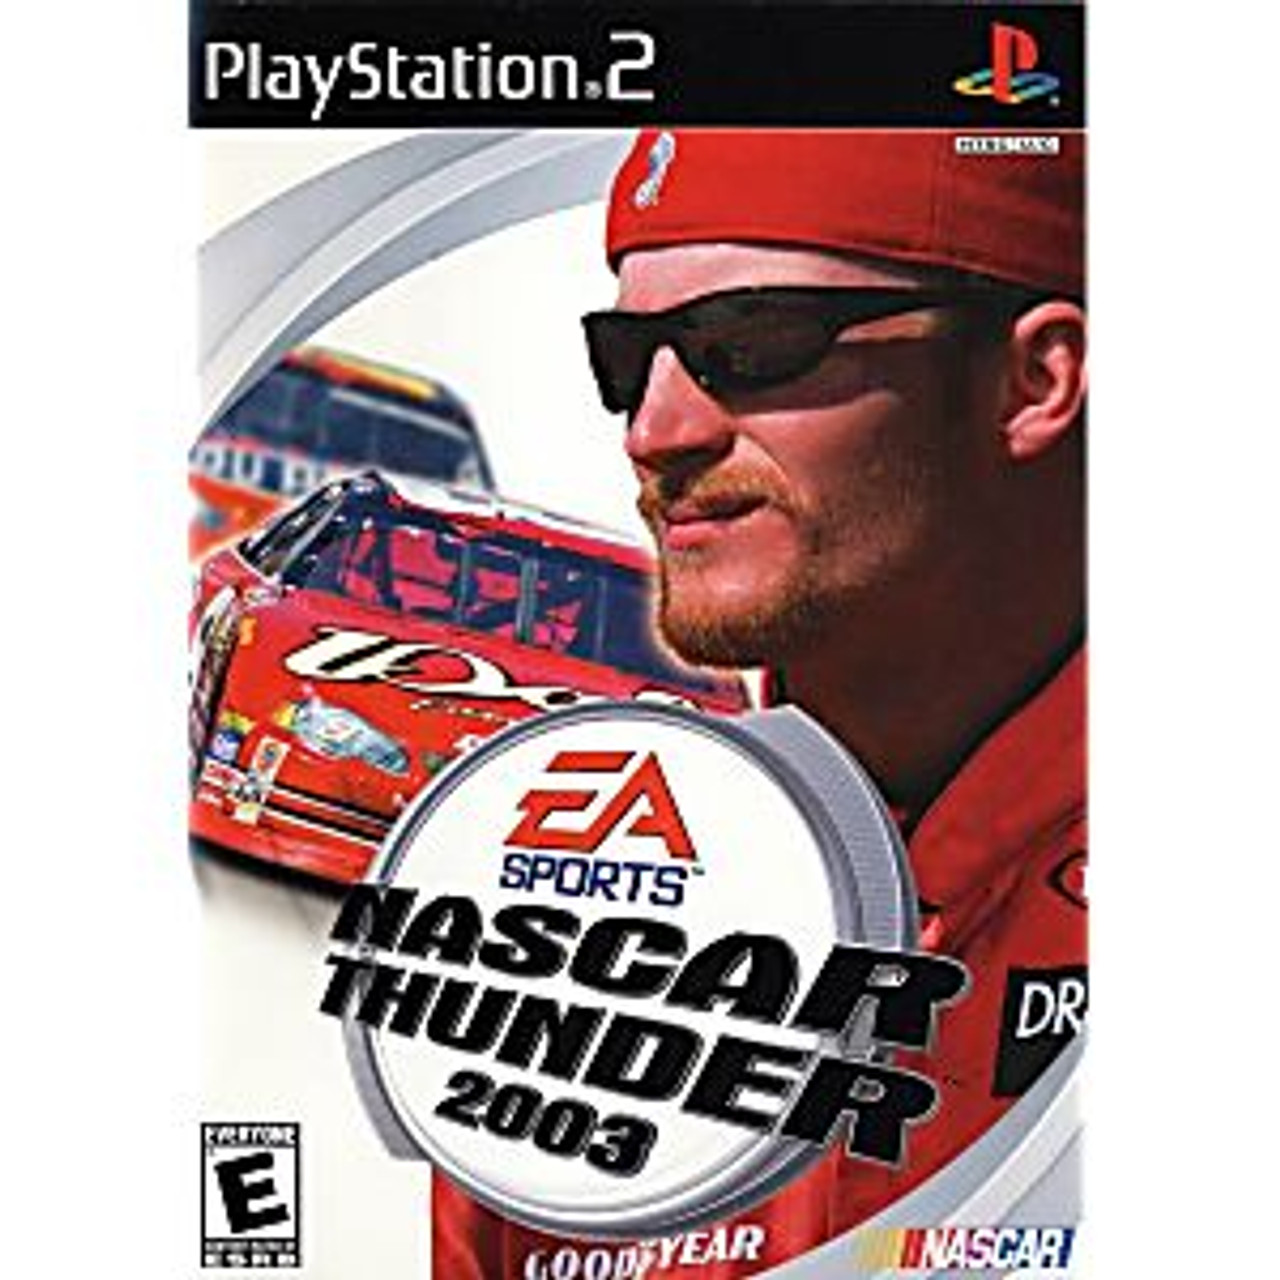 NASCAR THUNDER 2003 [E] - PS2